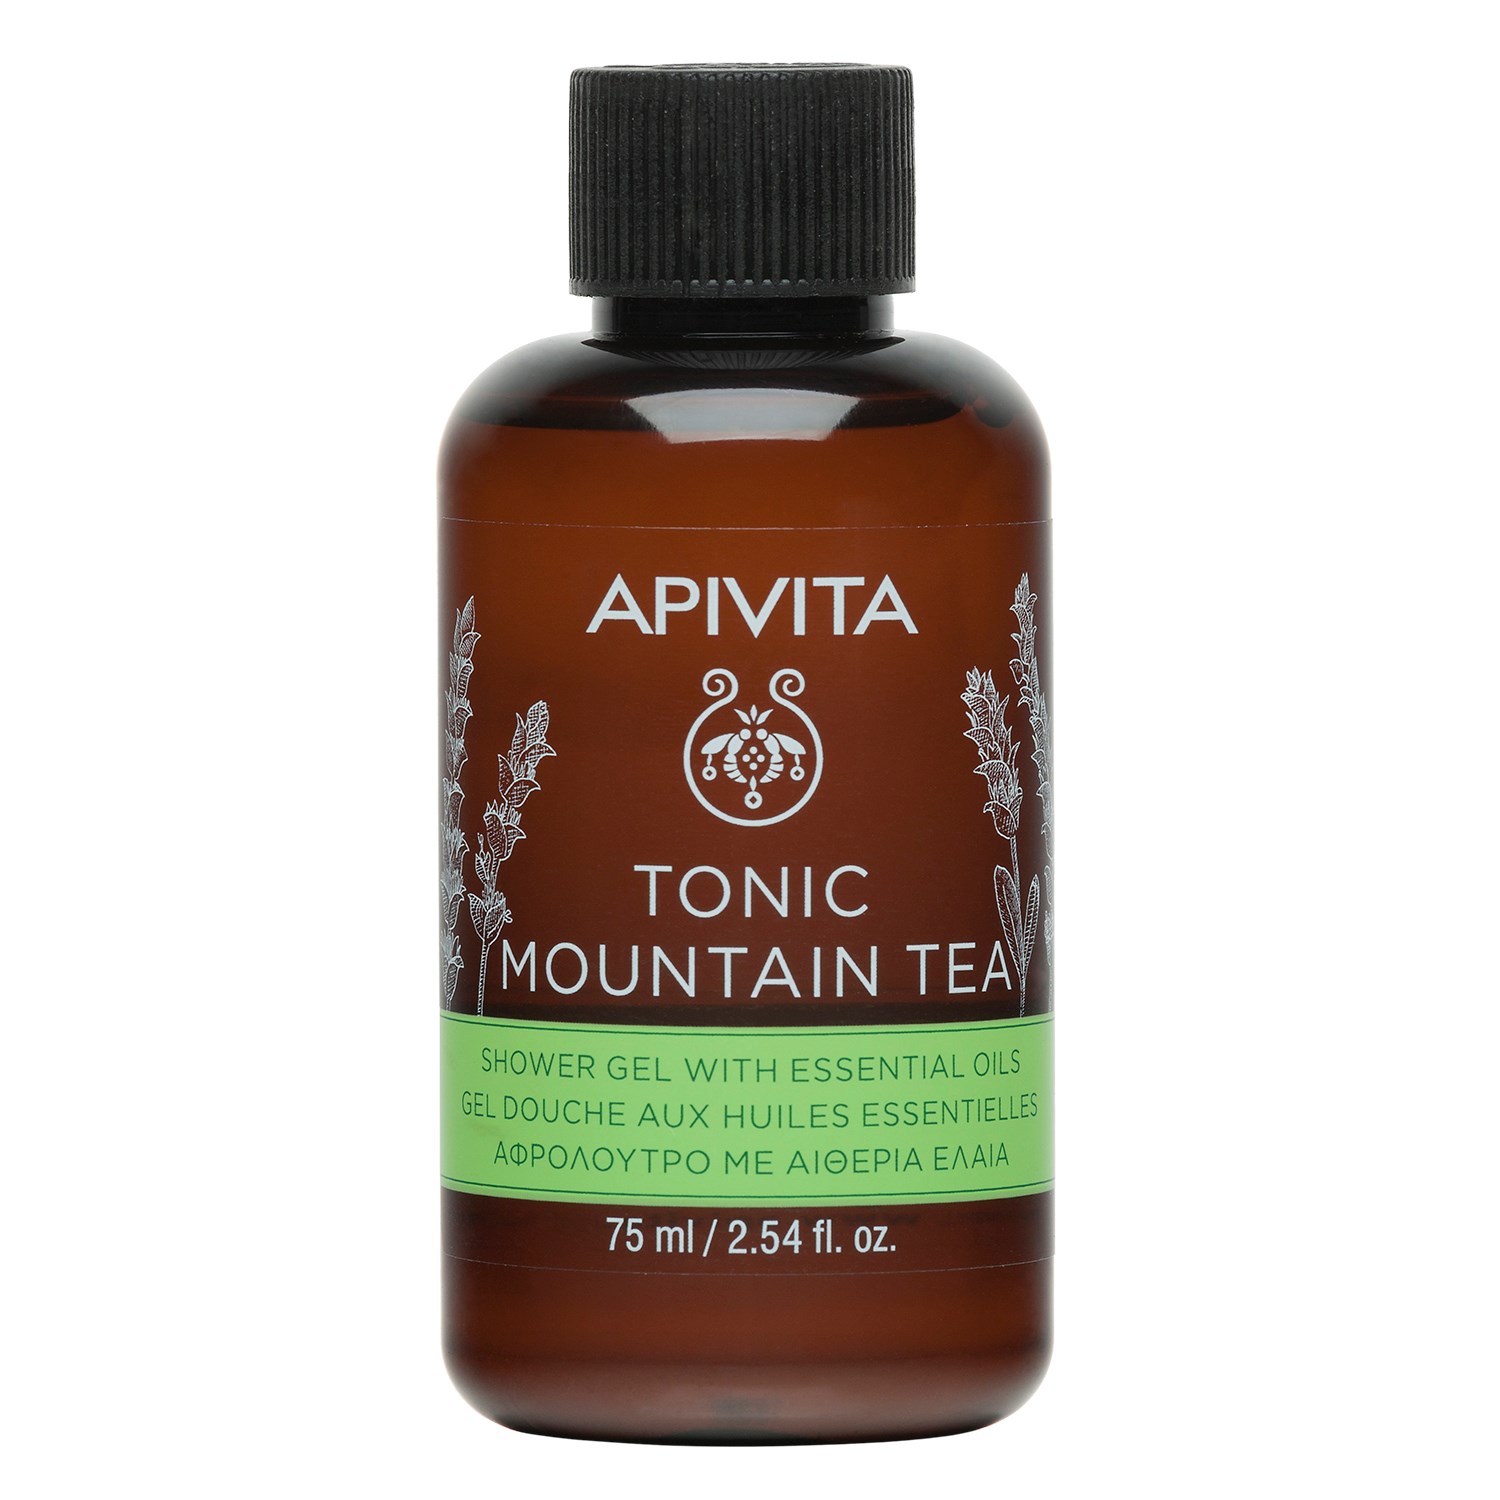 Bilde av Apivita Tonic Mountain Tea Travel Size Shower Gel With Essential Oils